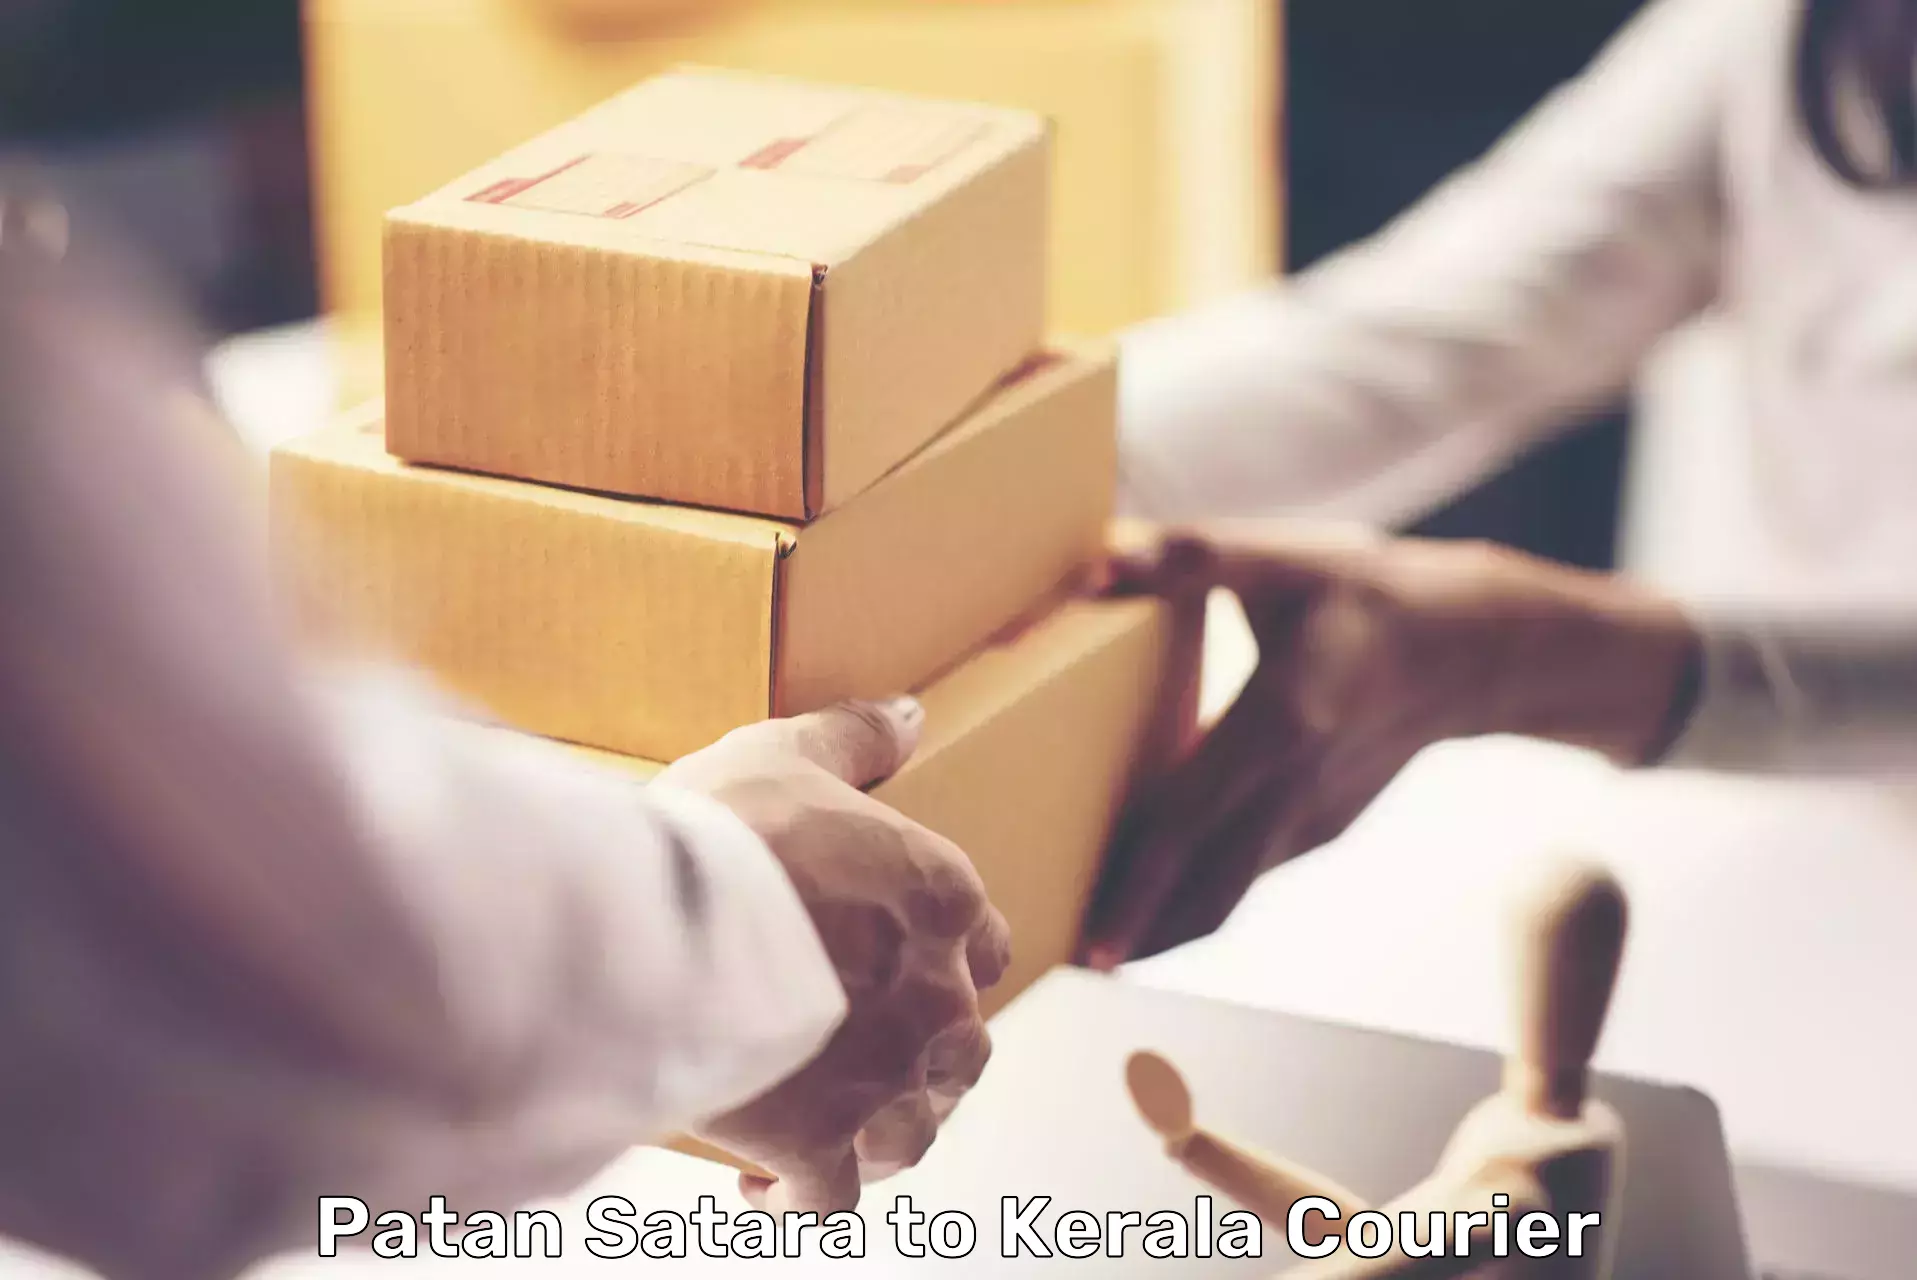 Bulk courier orders Patan Satara to Kozhikode